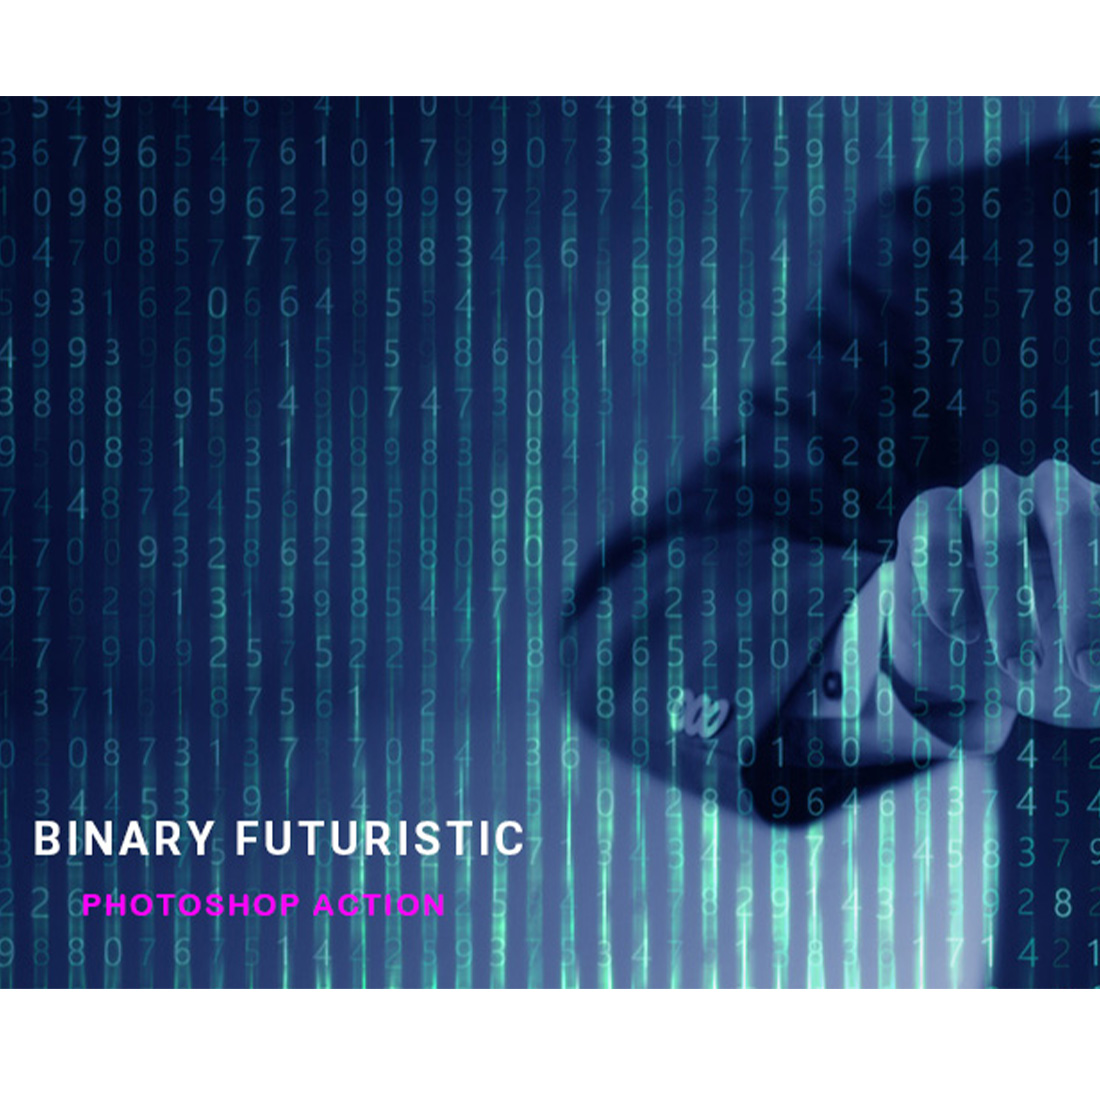 Binary Futuristic Photoshop Action cover image.